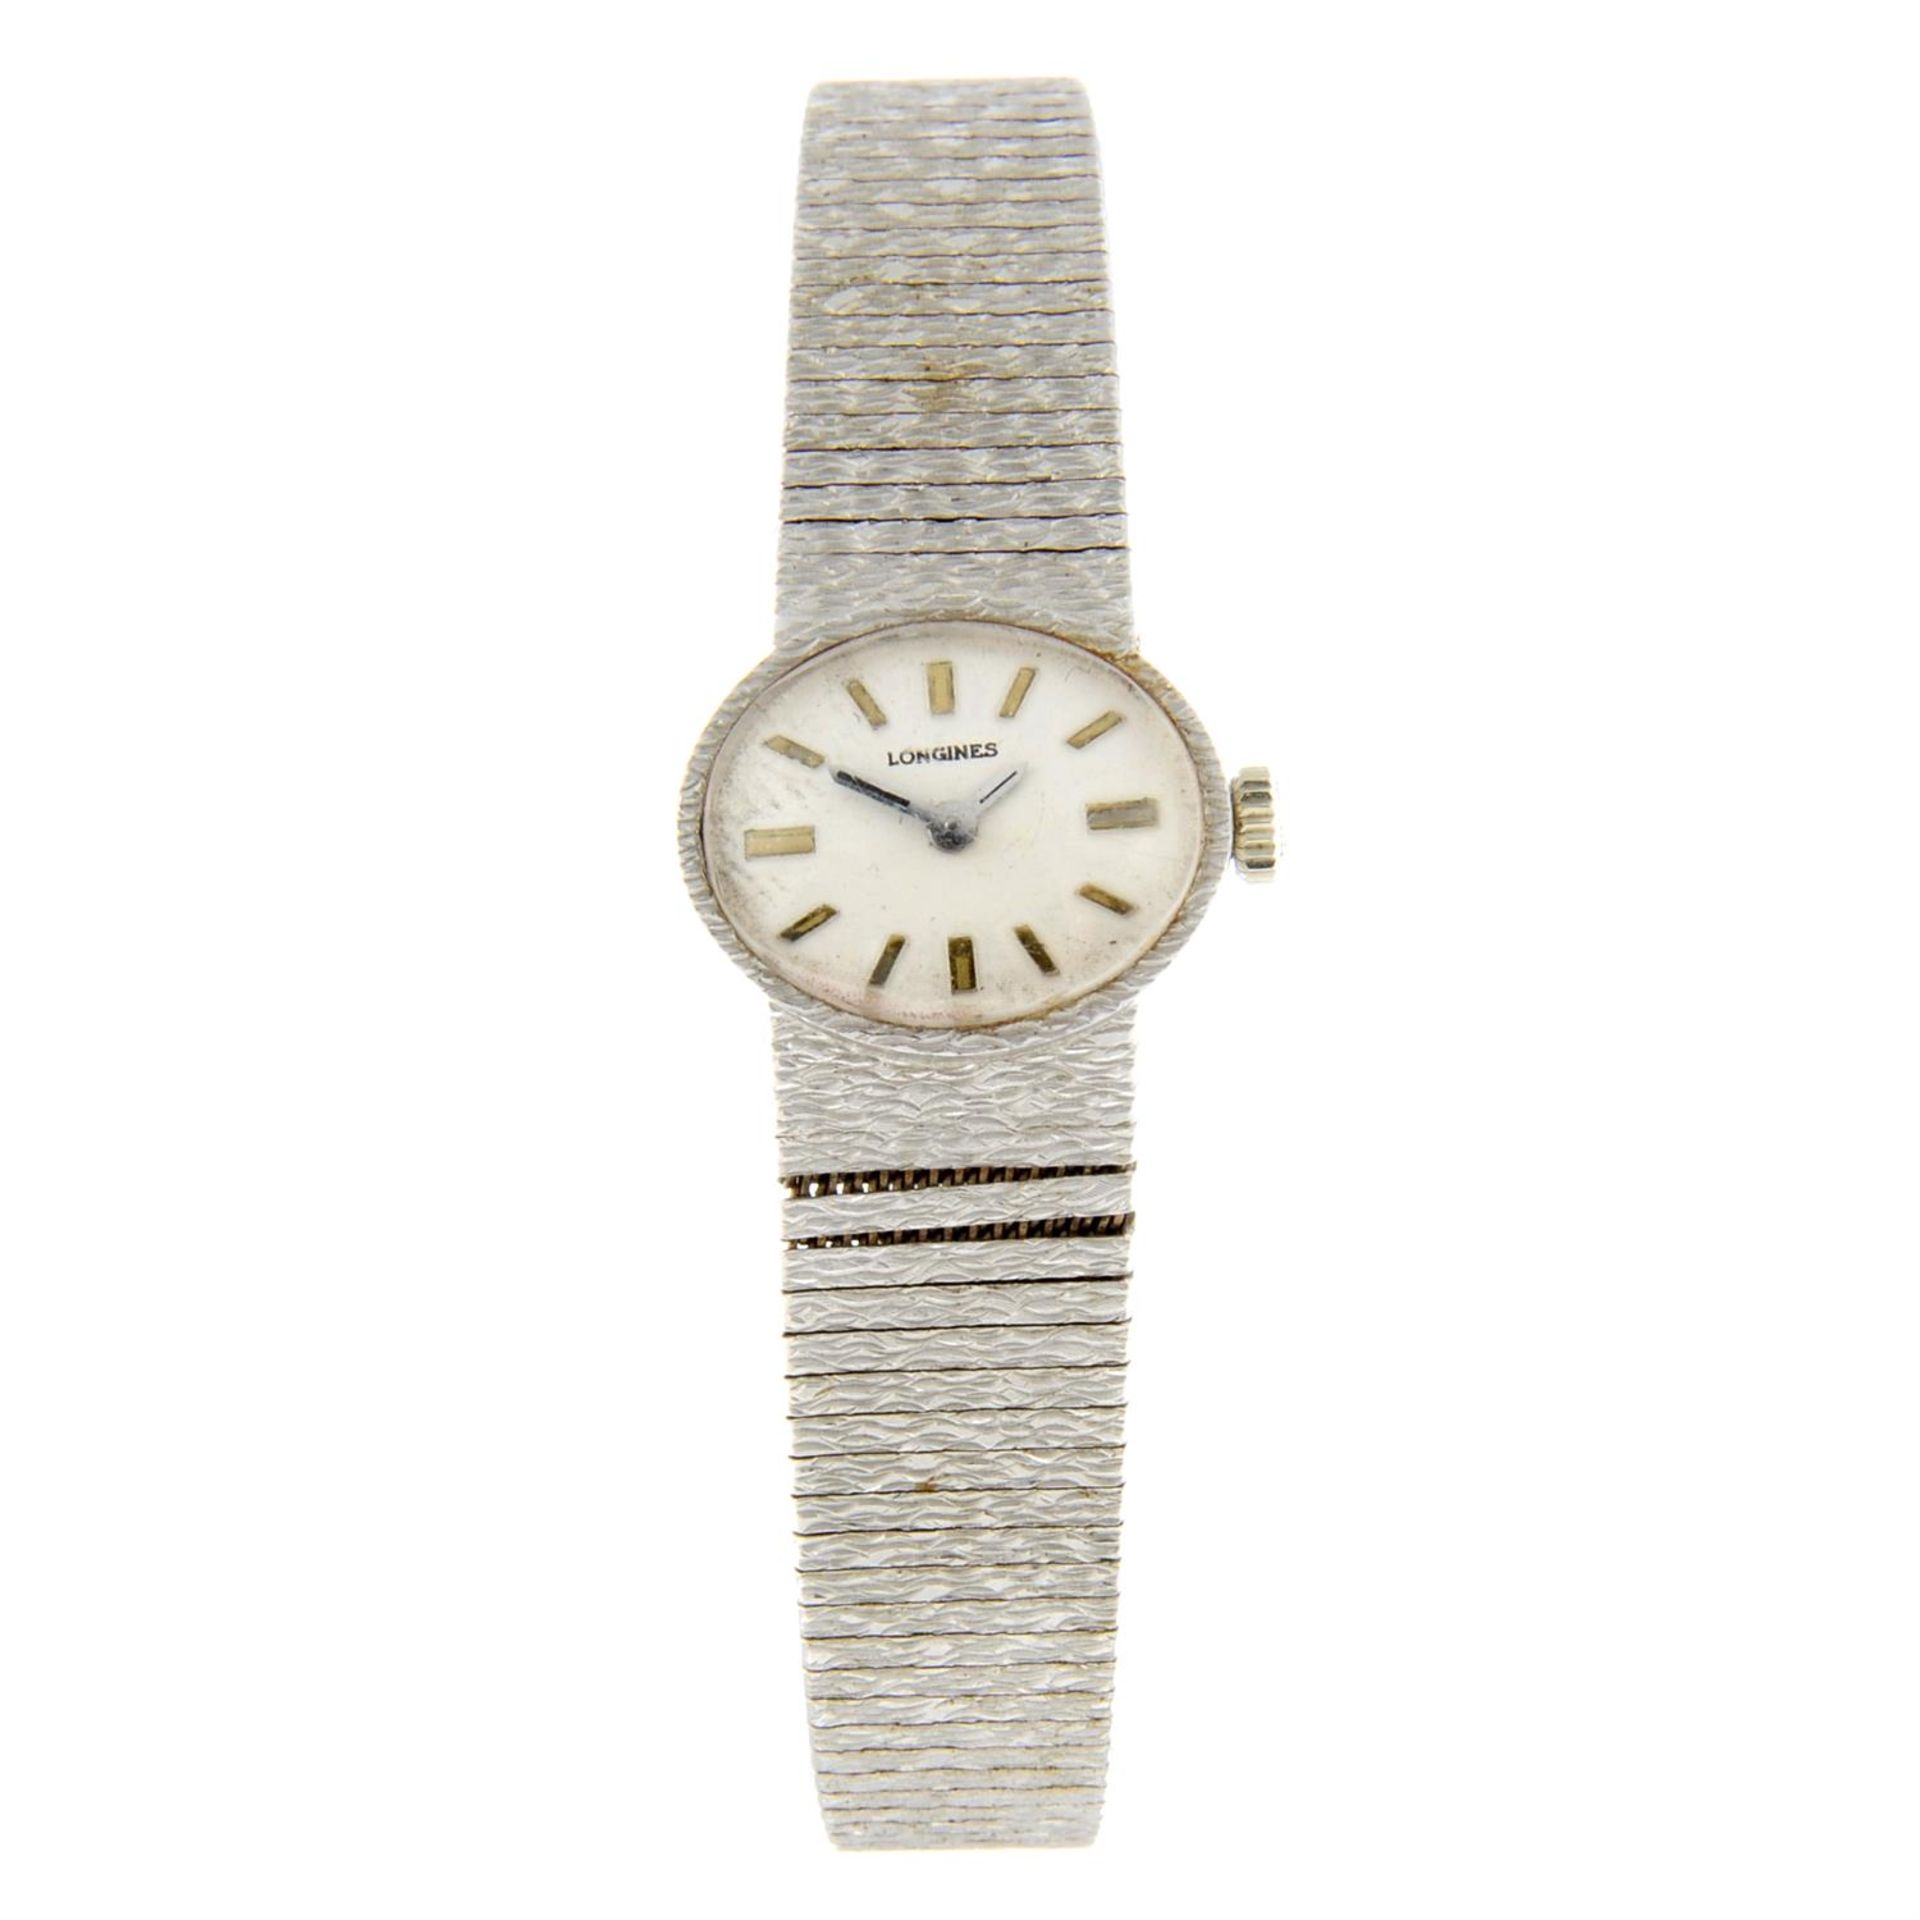 LONGINES - a 9ct white gold bracelet watch, 18mm.